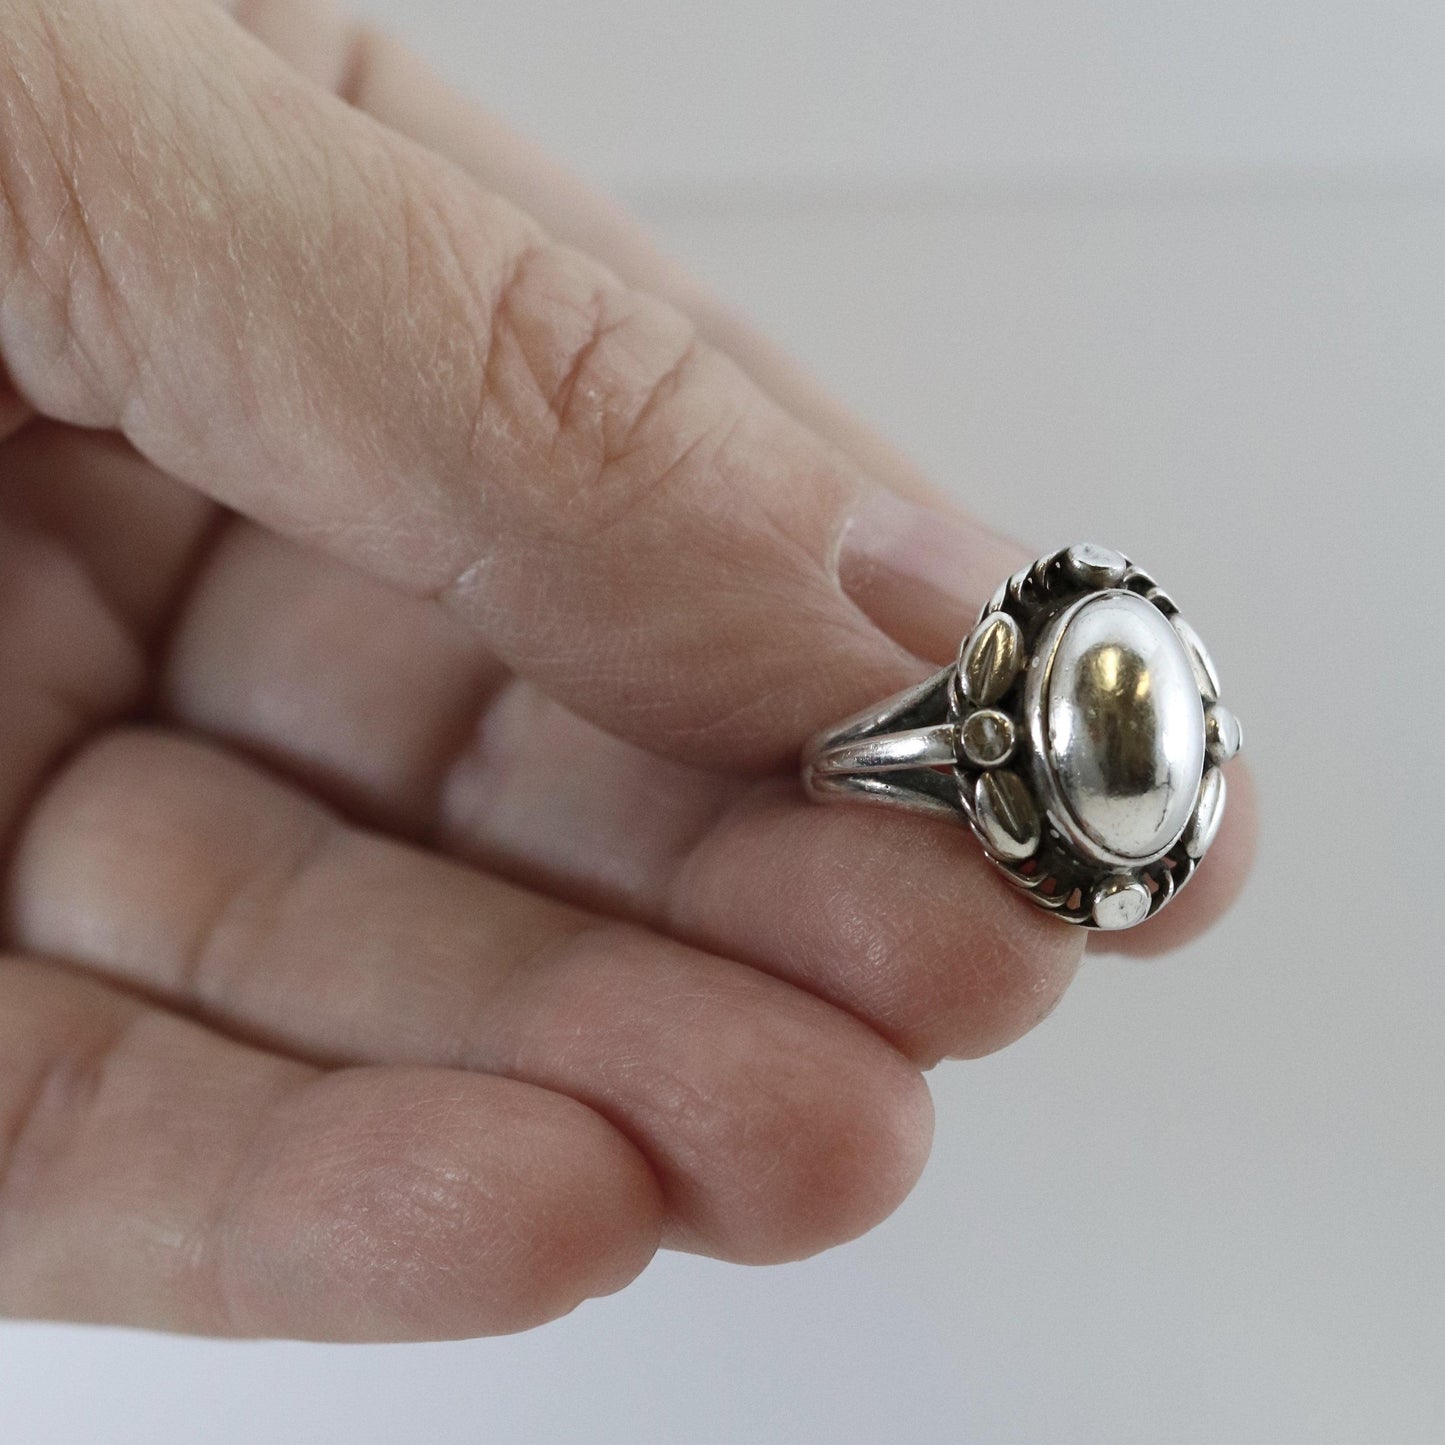 Vintage Georg Jensen Jewelry | Art Nouveau Silver Cabochon Ring 1A - Carmel Fine Silver Jewelry